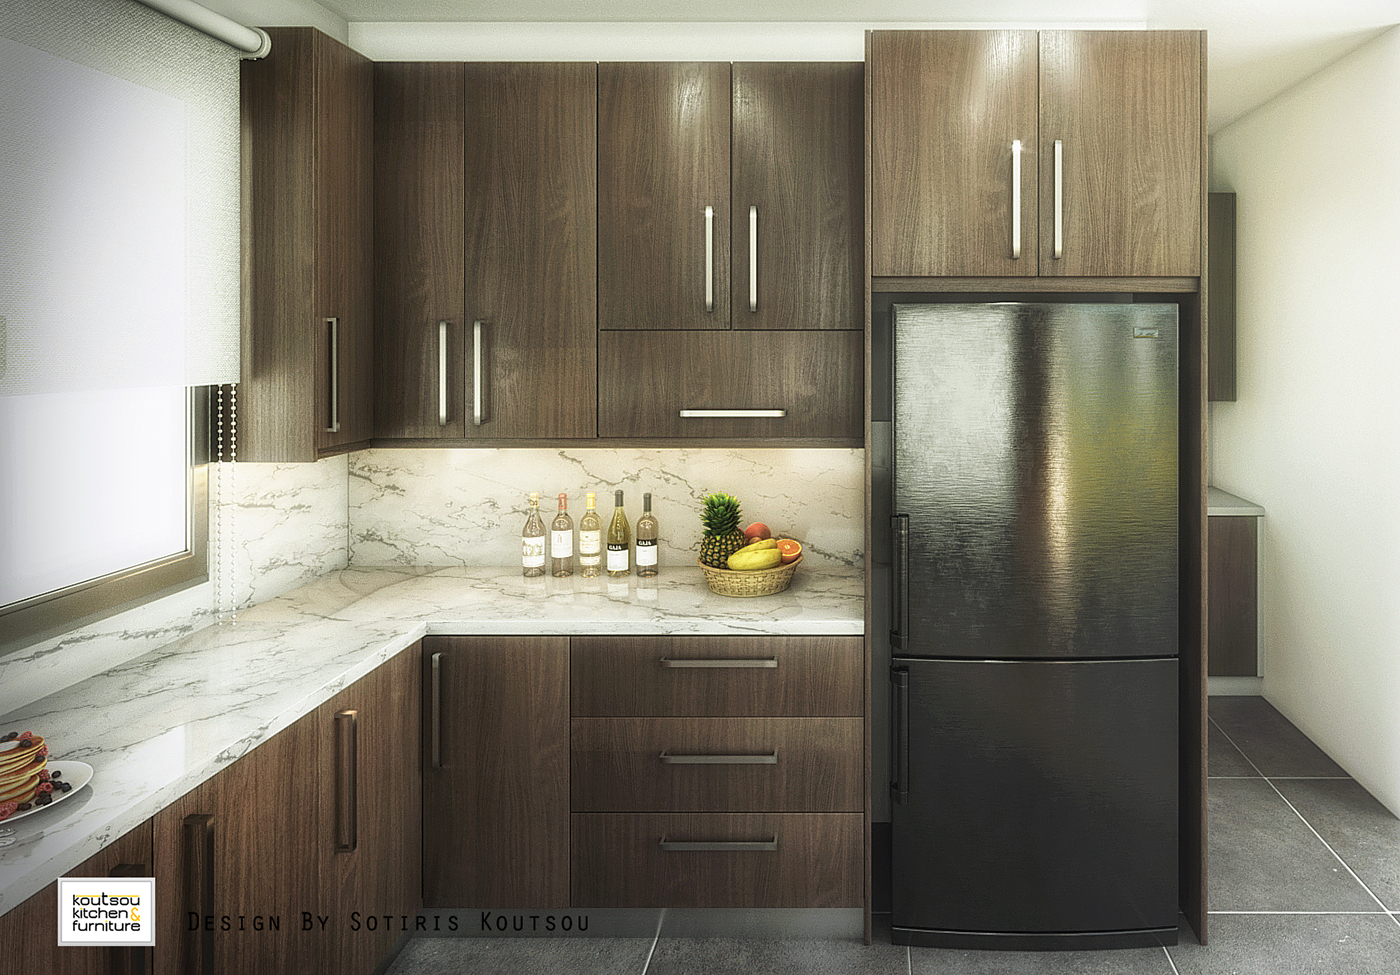 #Design #interior #kitchen #coronarenderer #3dsmax #sotiriskoutsou #furnituredesign #architecture #architect